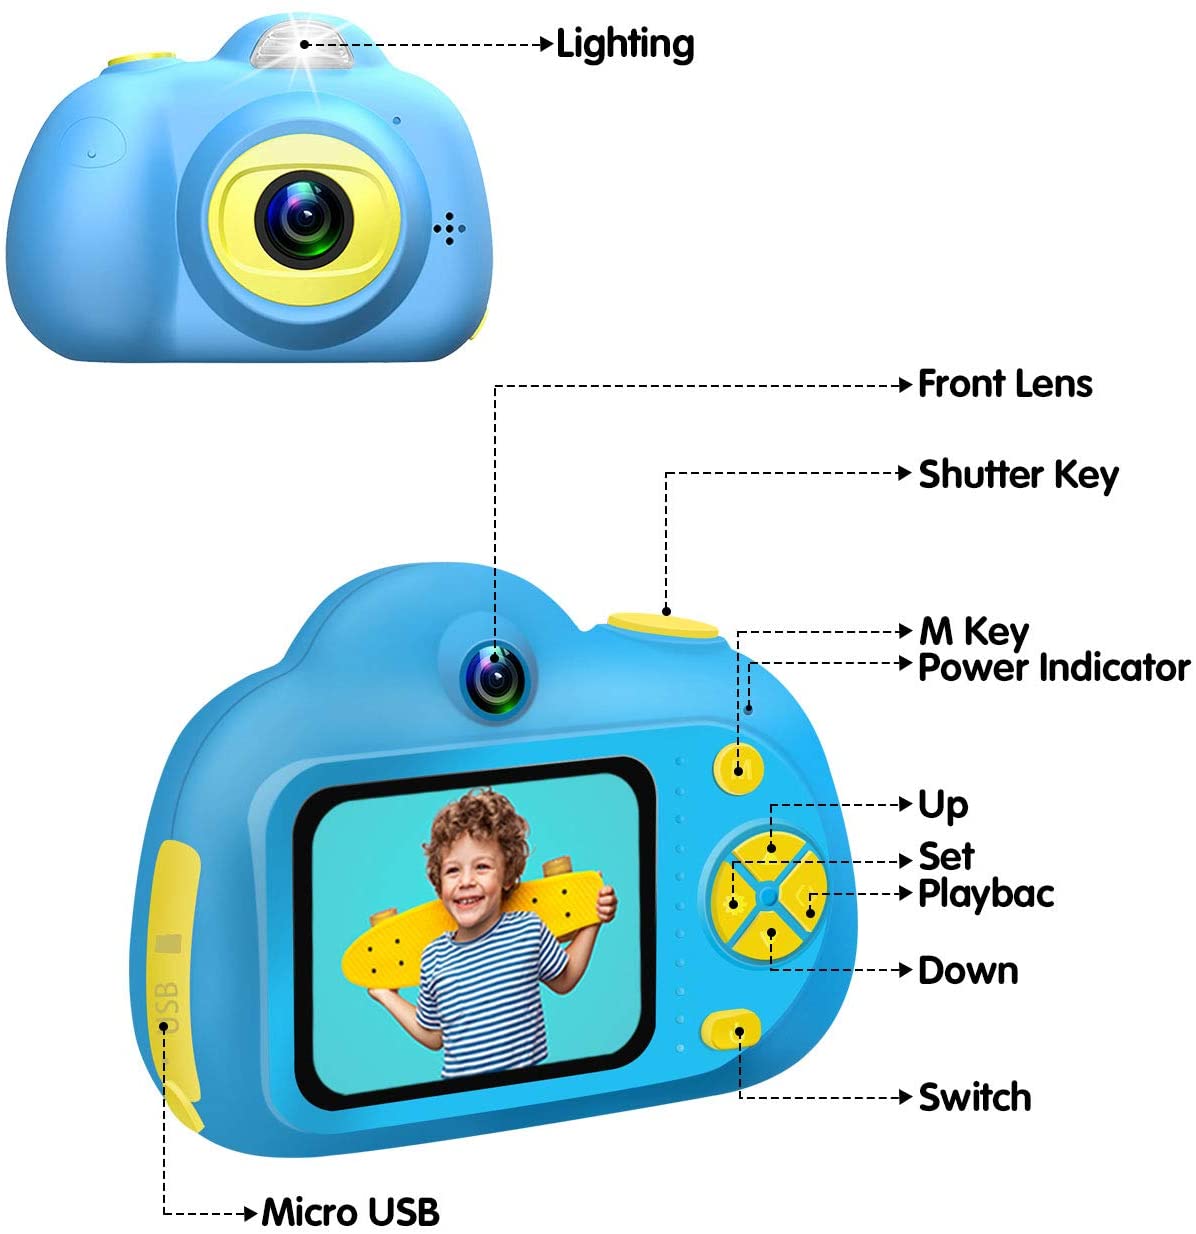 Dreamingbox 8.0 Mega Pixels & 1080p Hd Video Kids Digital Camera Best Gifts for Kids